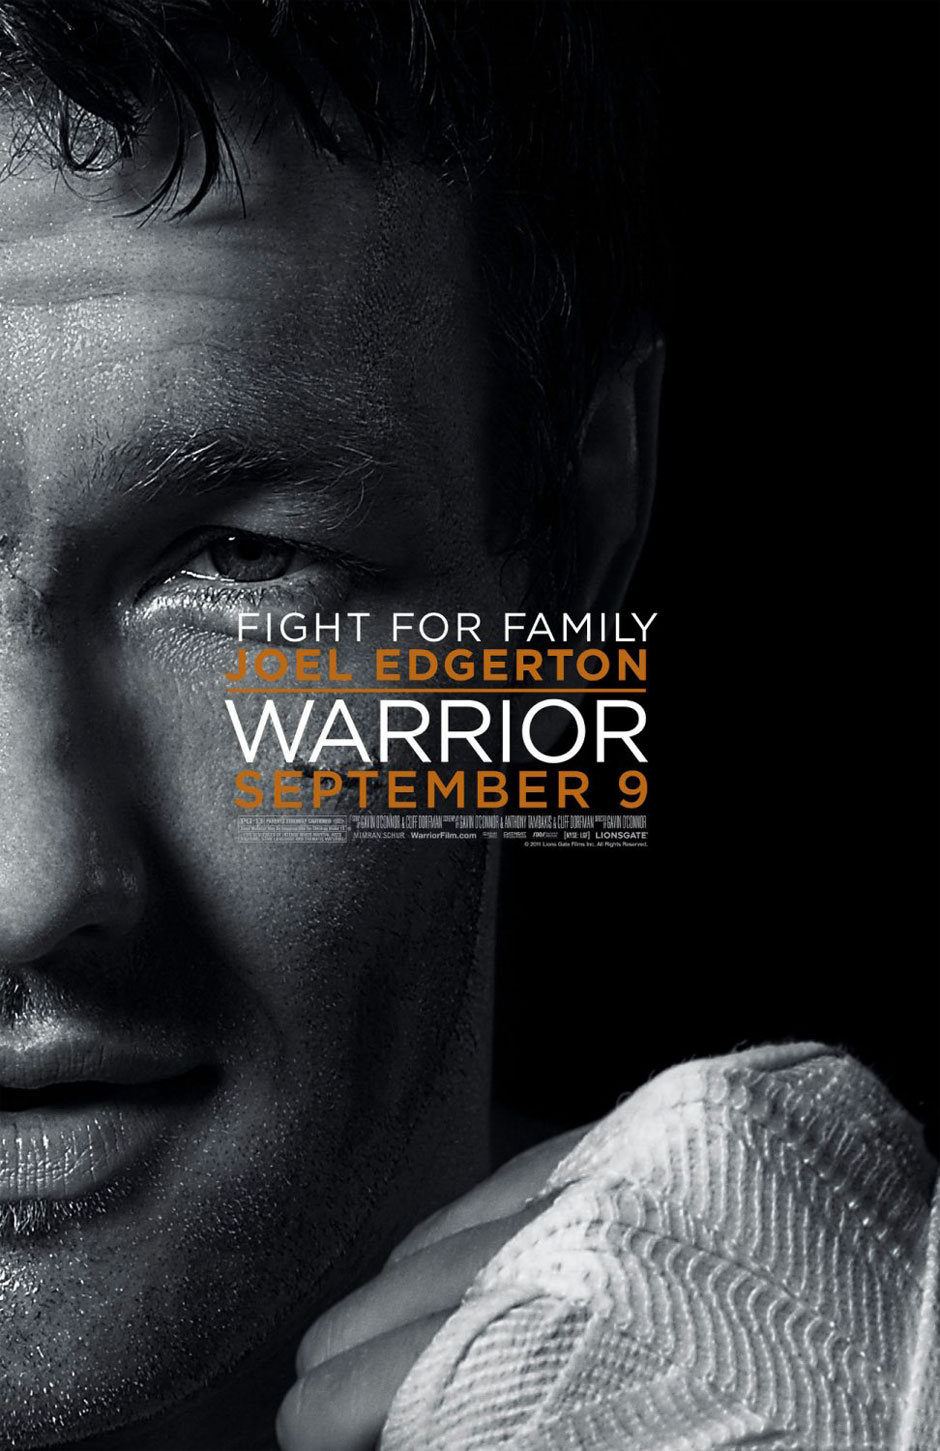 warrior movie review